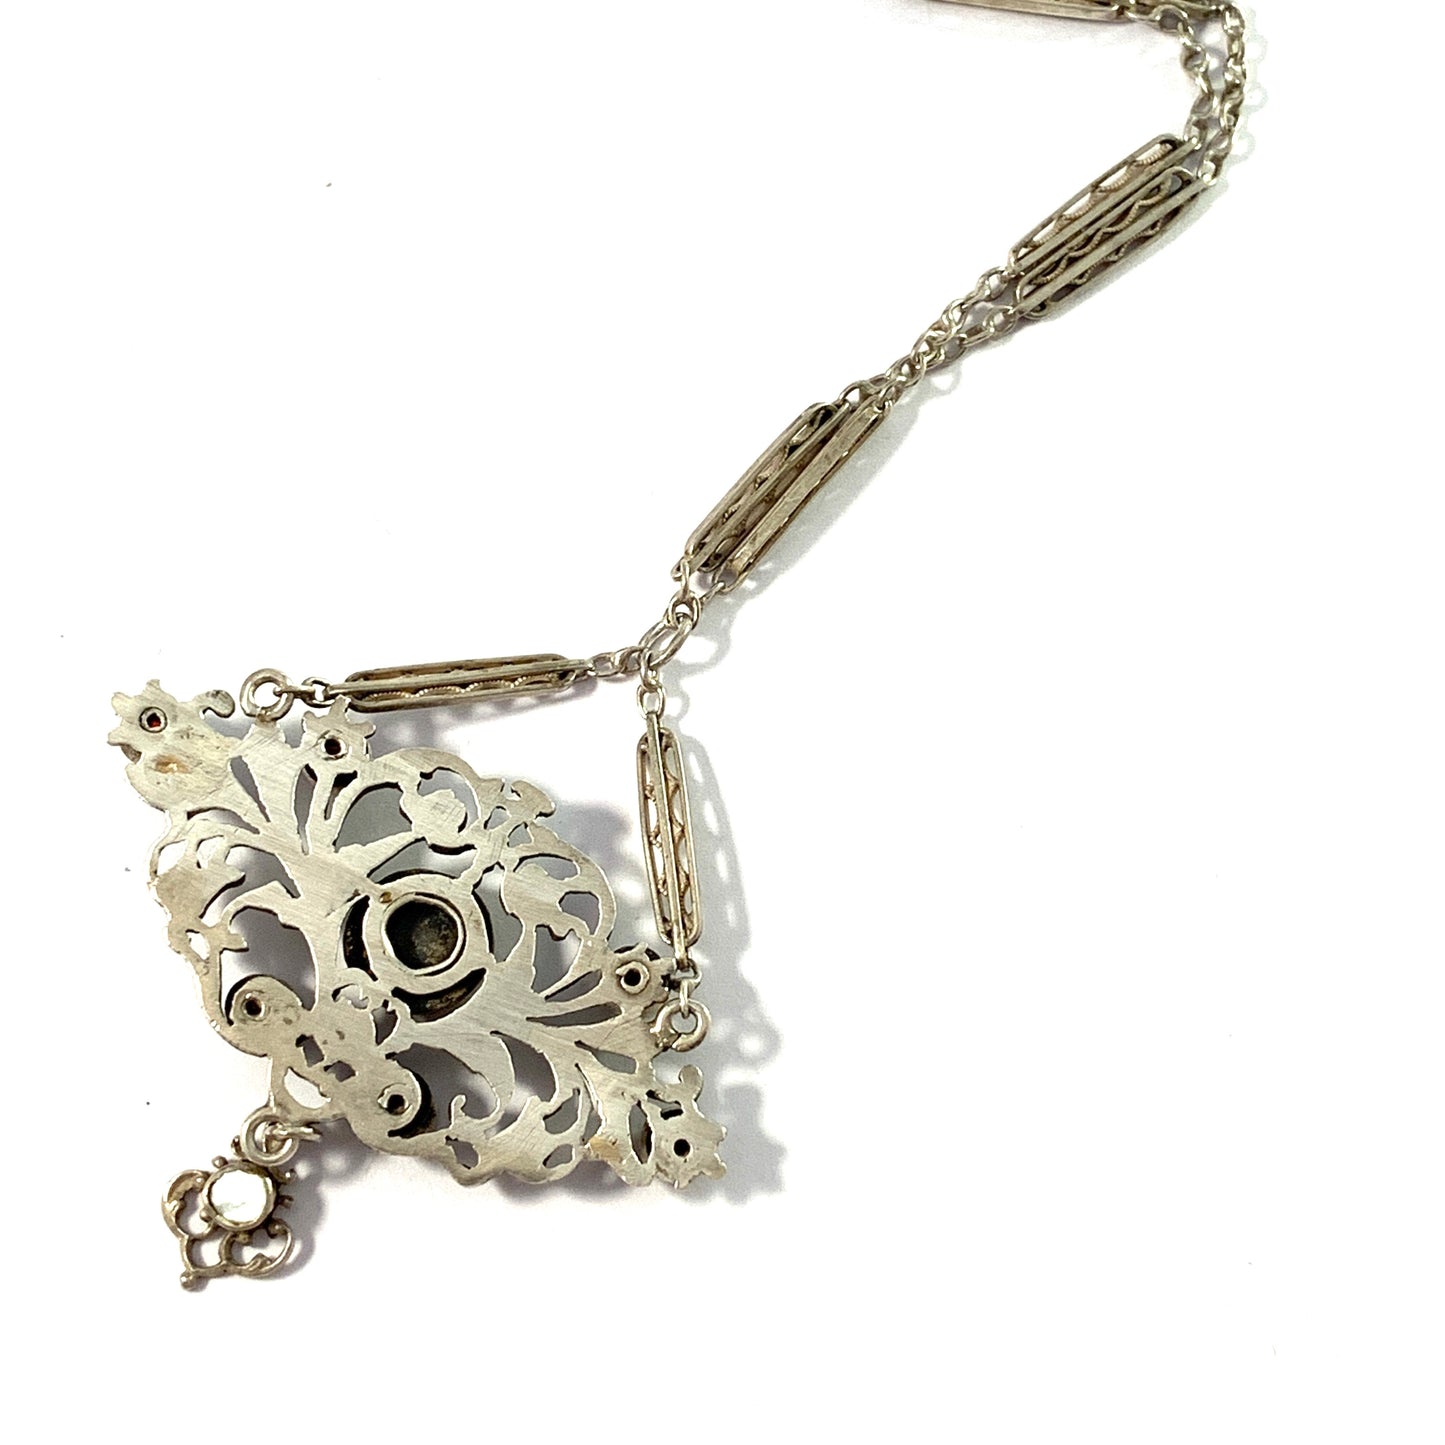 Maker EL, Germany c year 1900 Edwardian 800 Silver M o P Paste Stone Pendant Necklace.